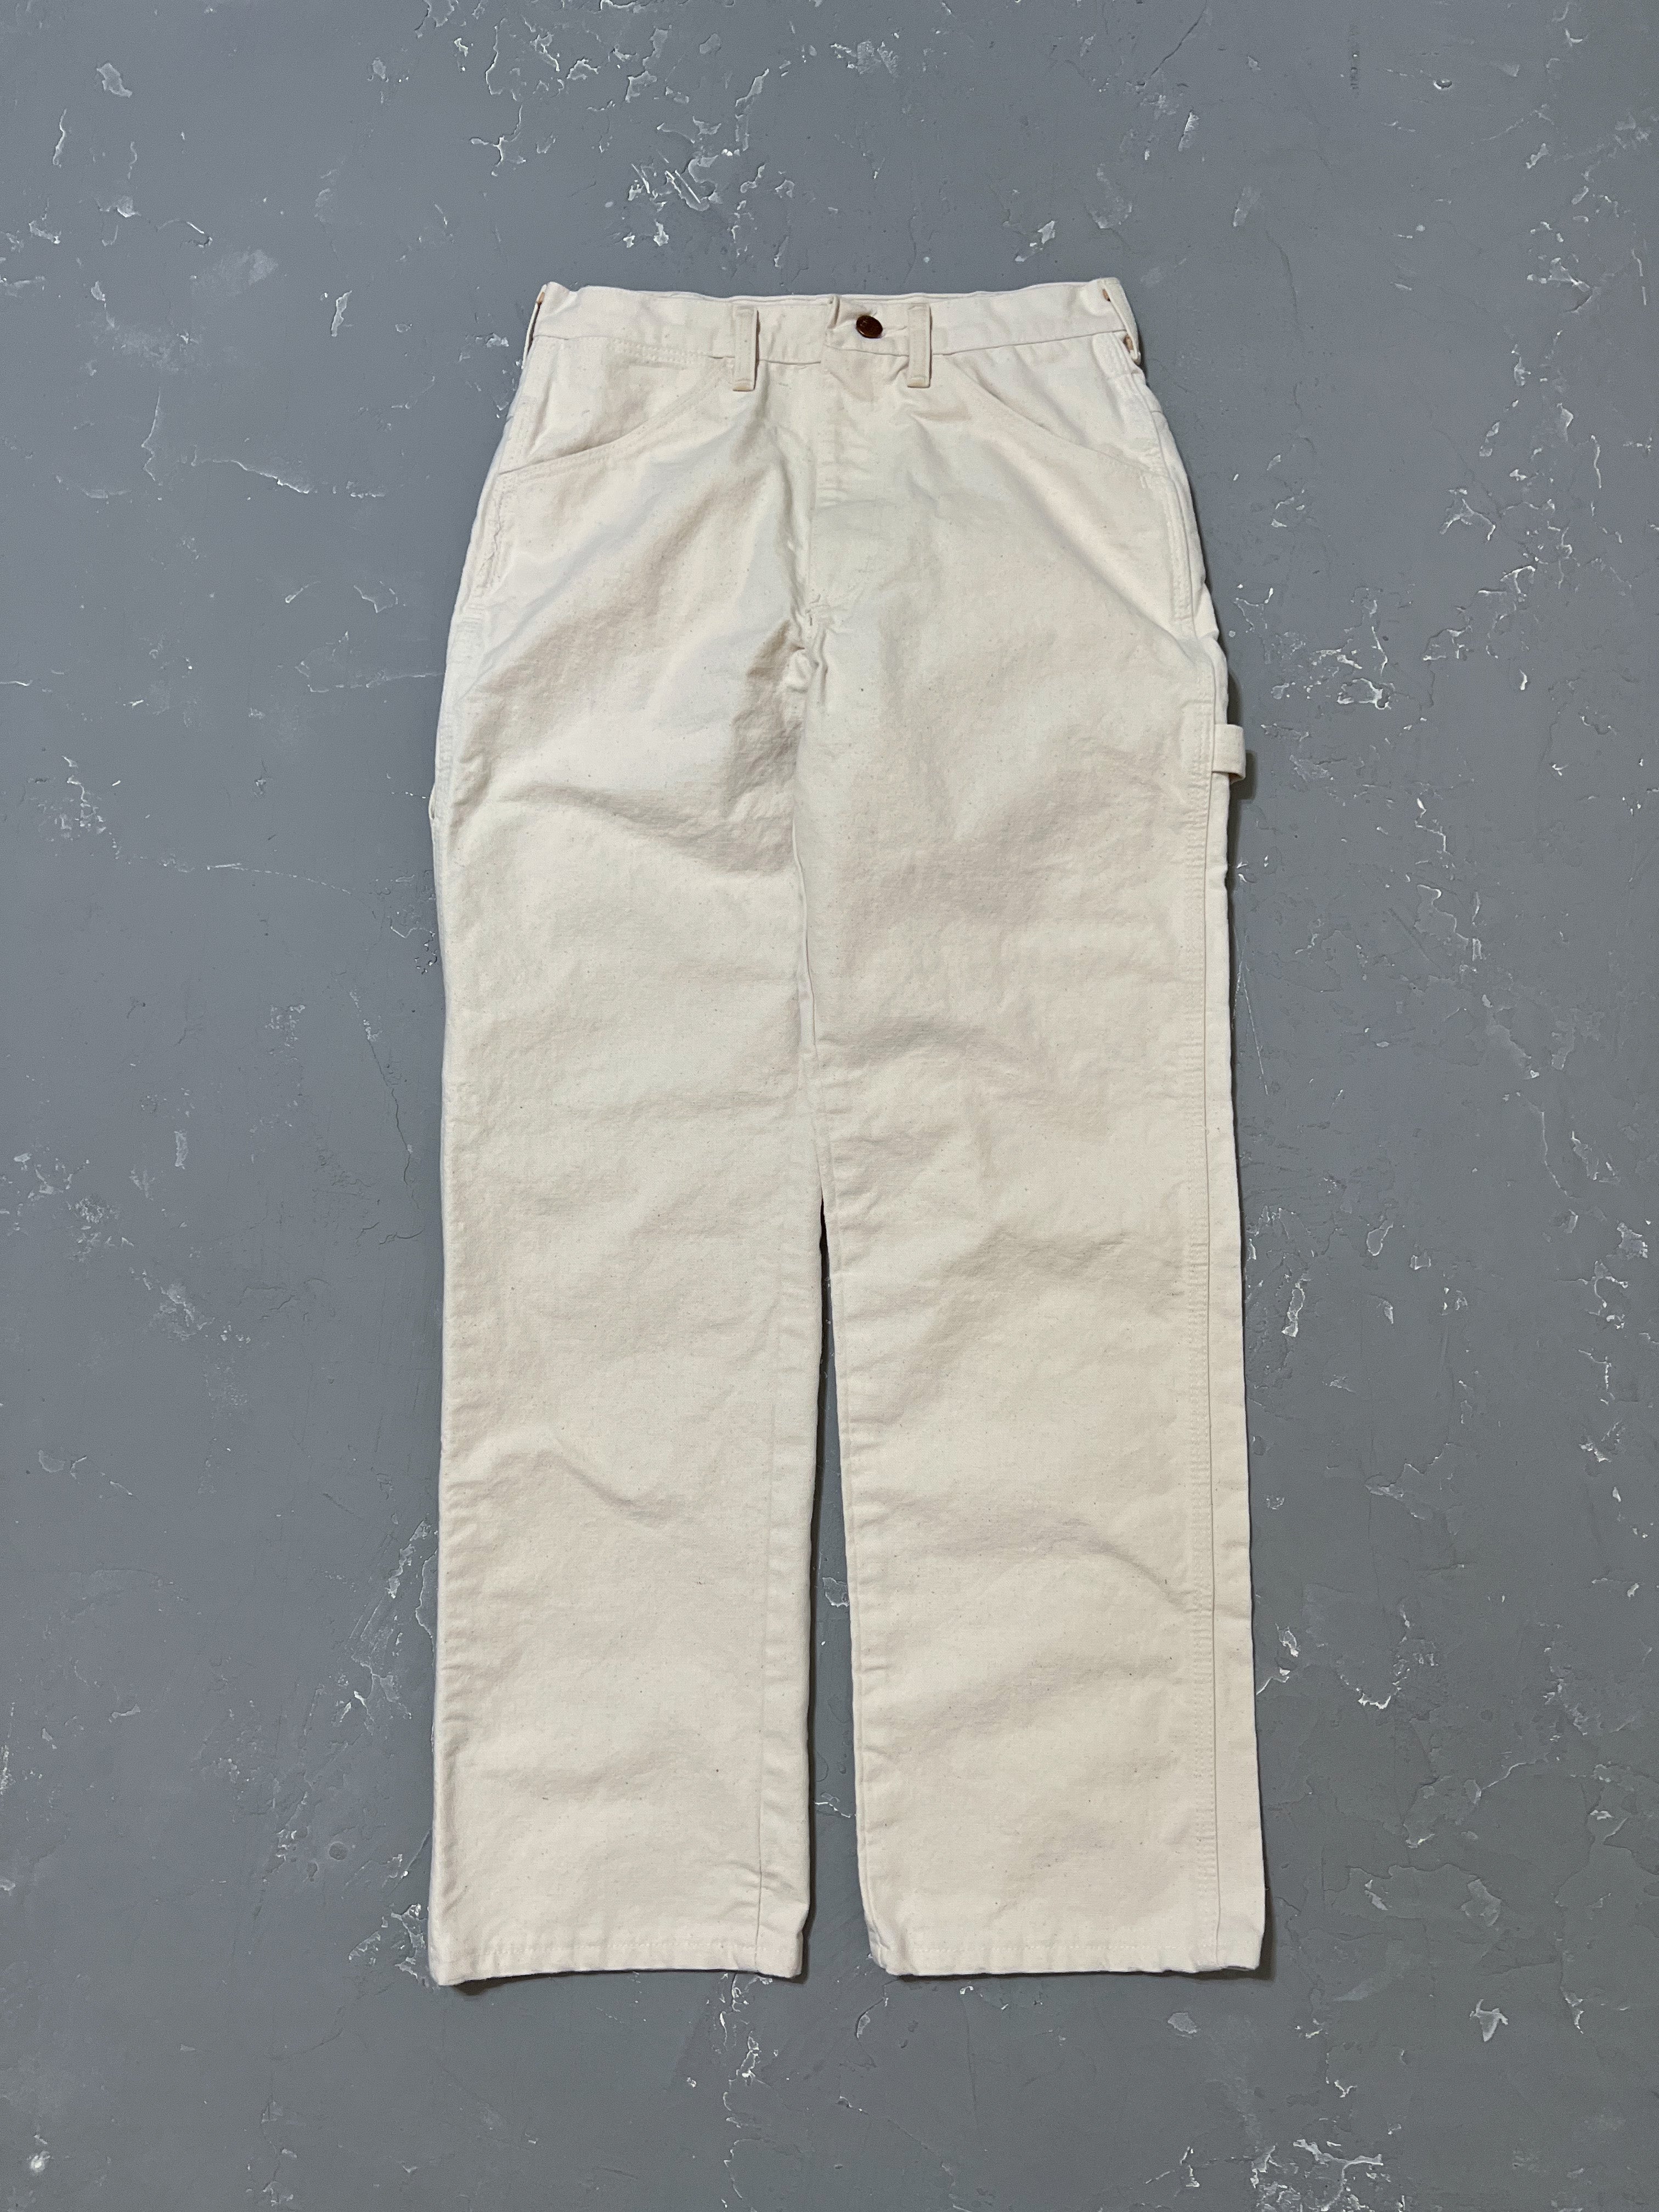 1980s Ivory Big Ben Carpenter Work Pants [29 x 30]